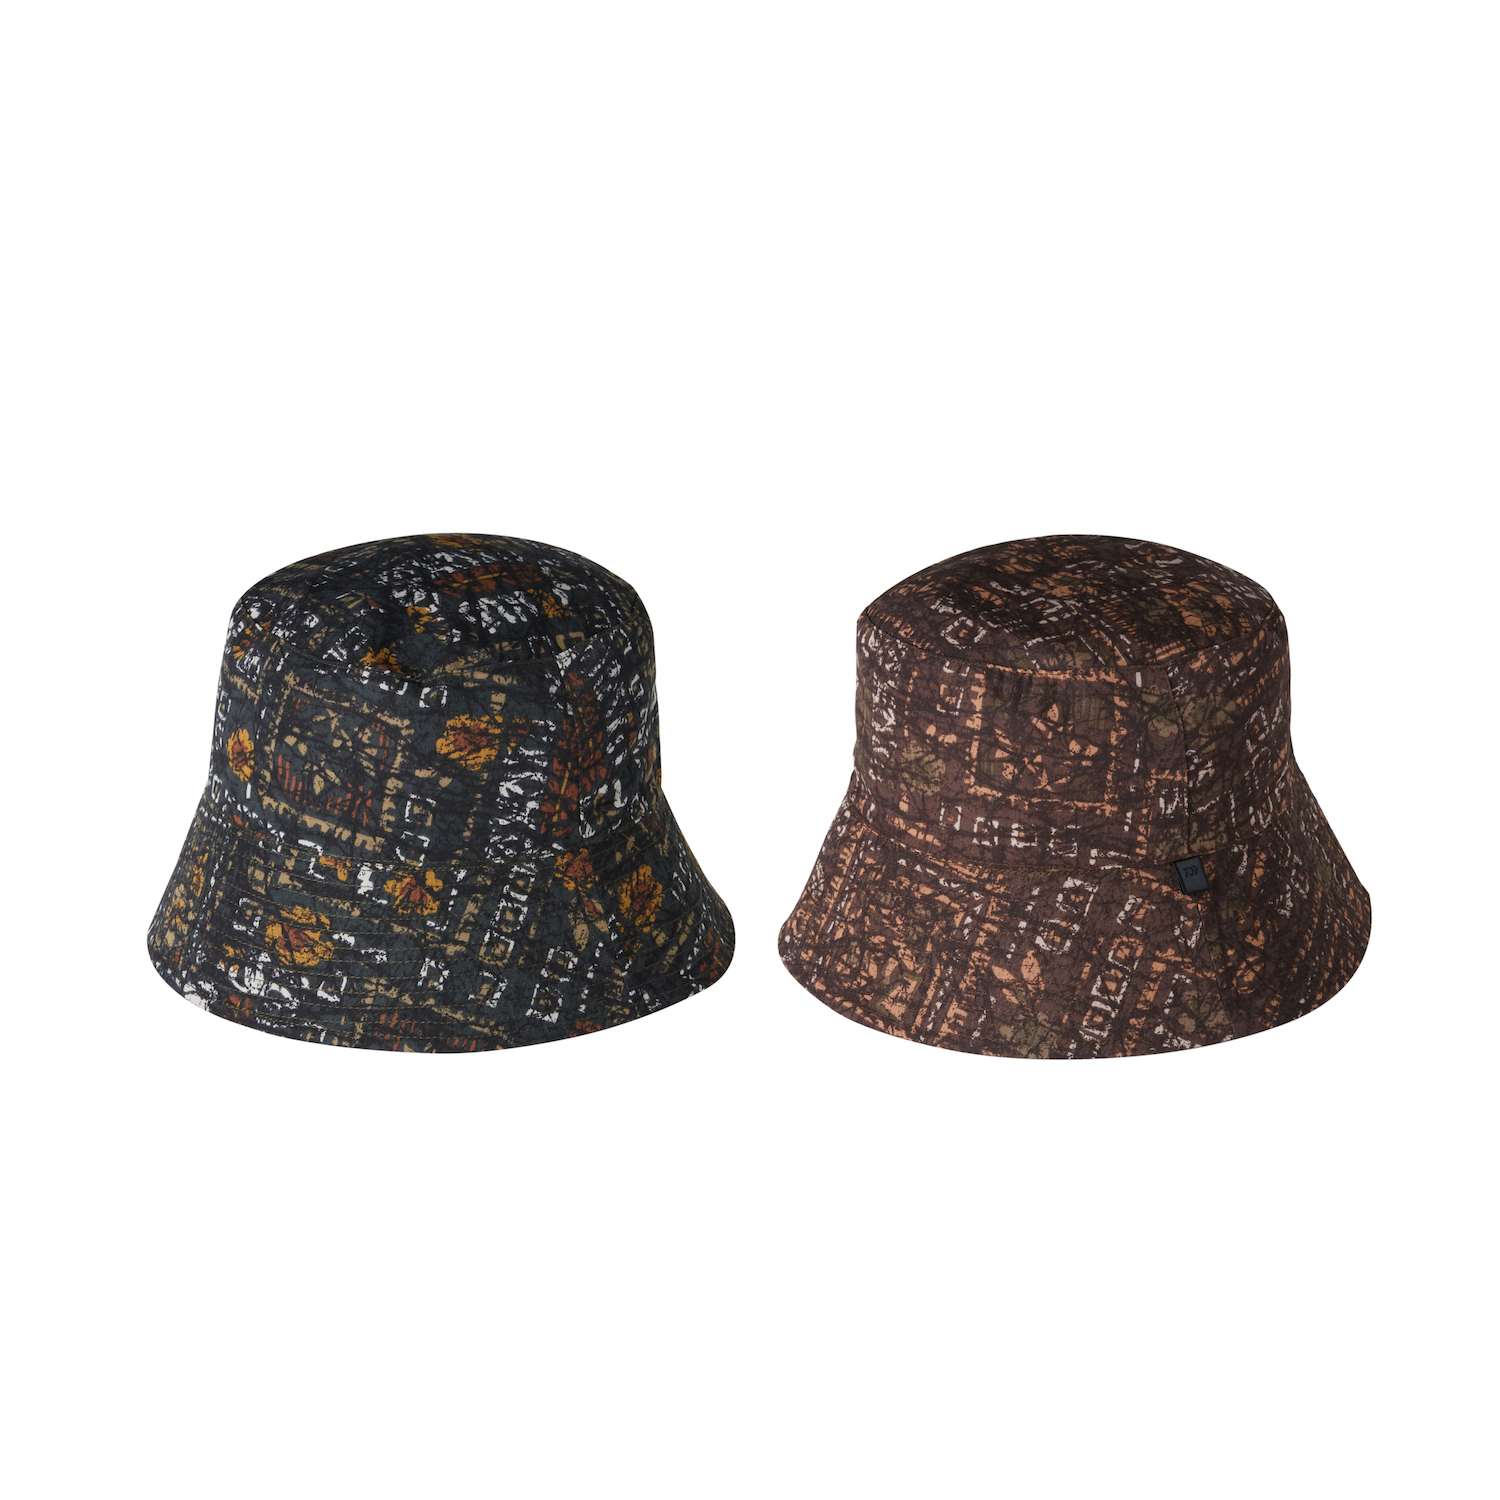 DAIWA PIER39 / TECH REVERSIBLE BUCKET HAT (Brown , Charcoall)